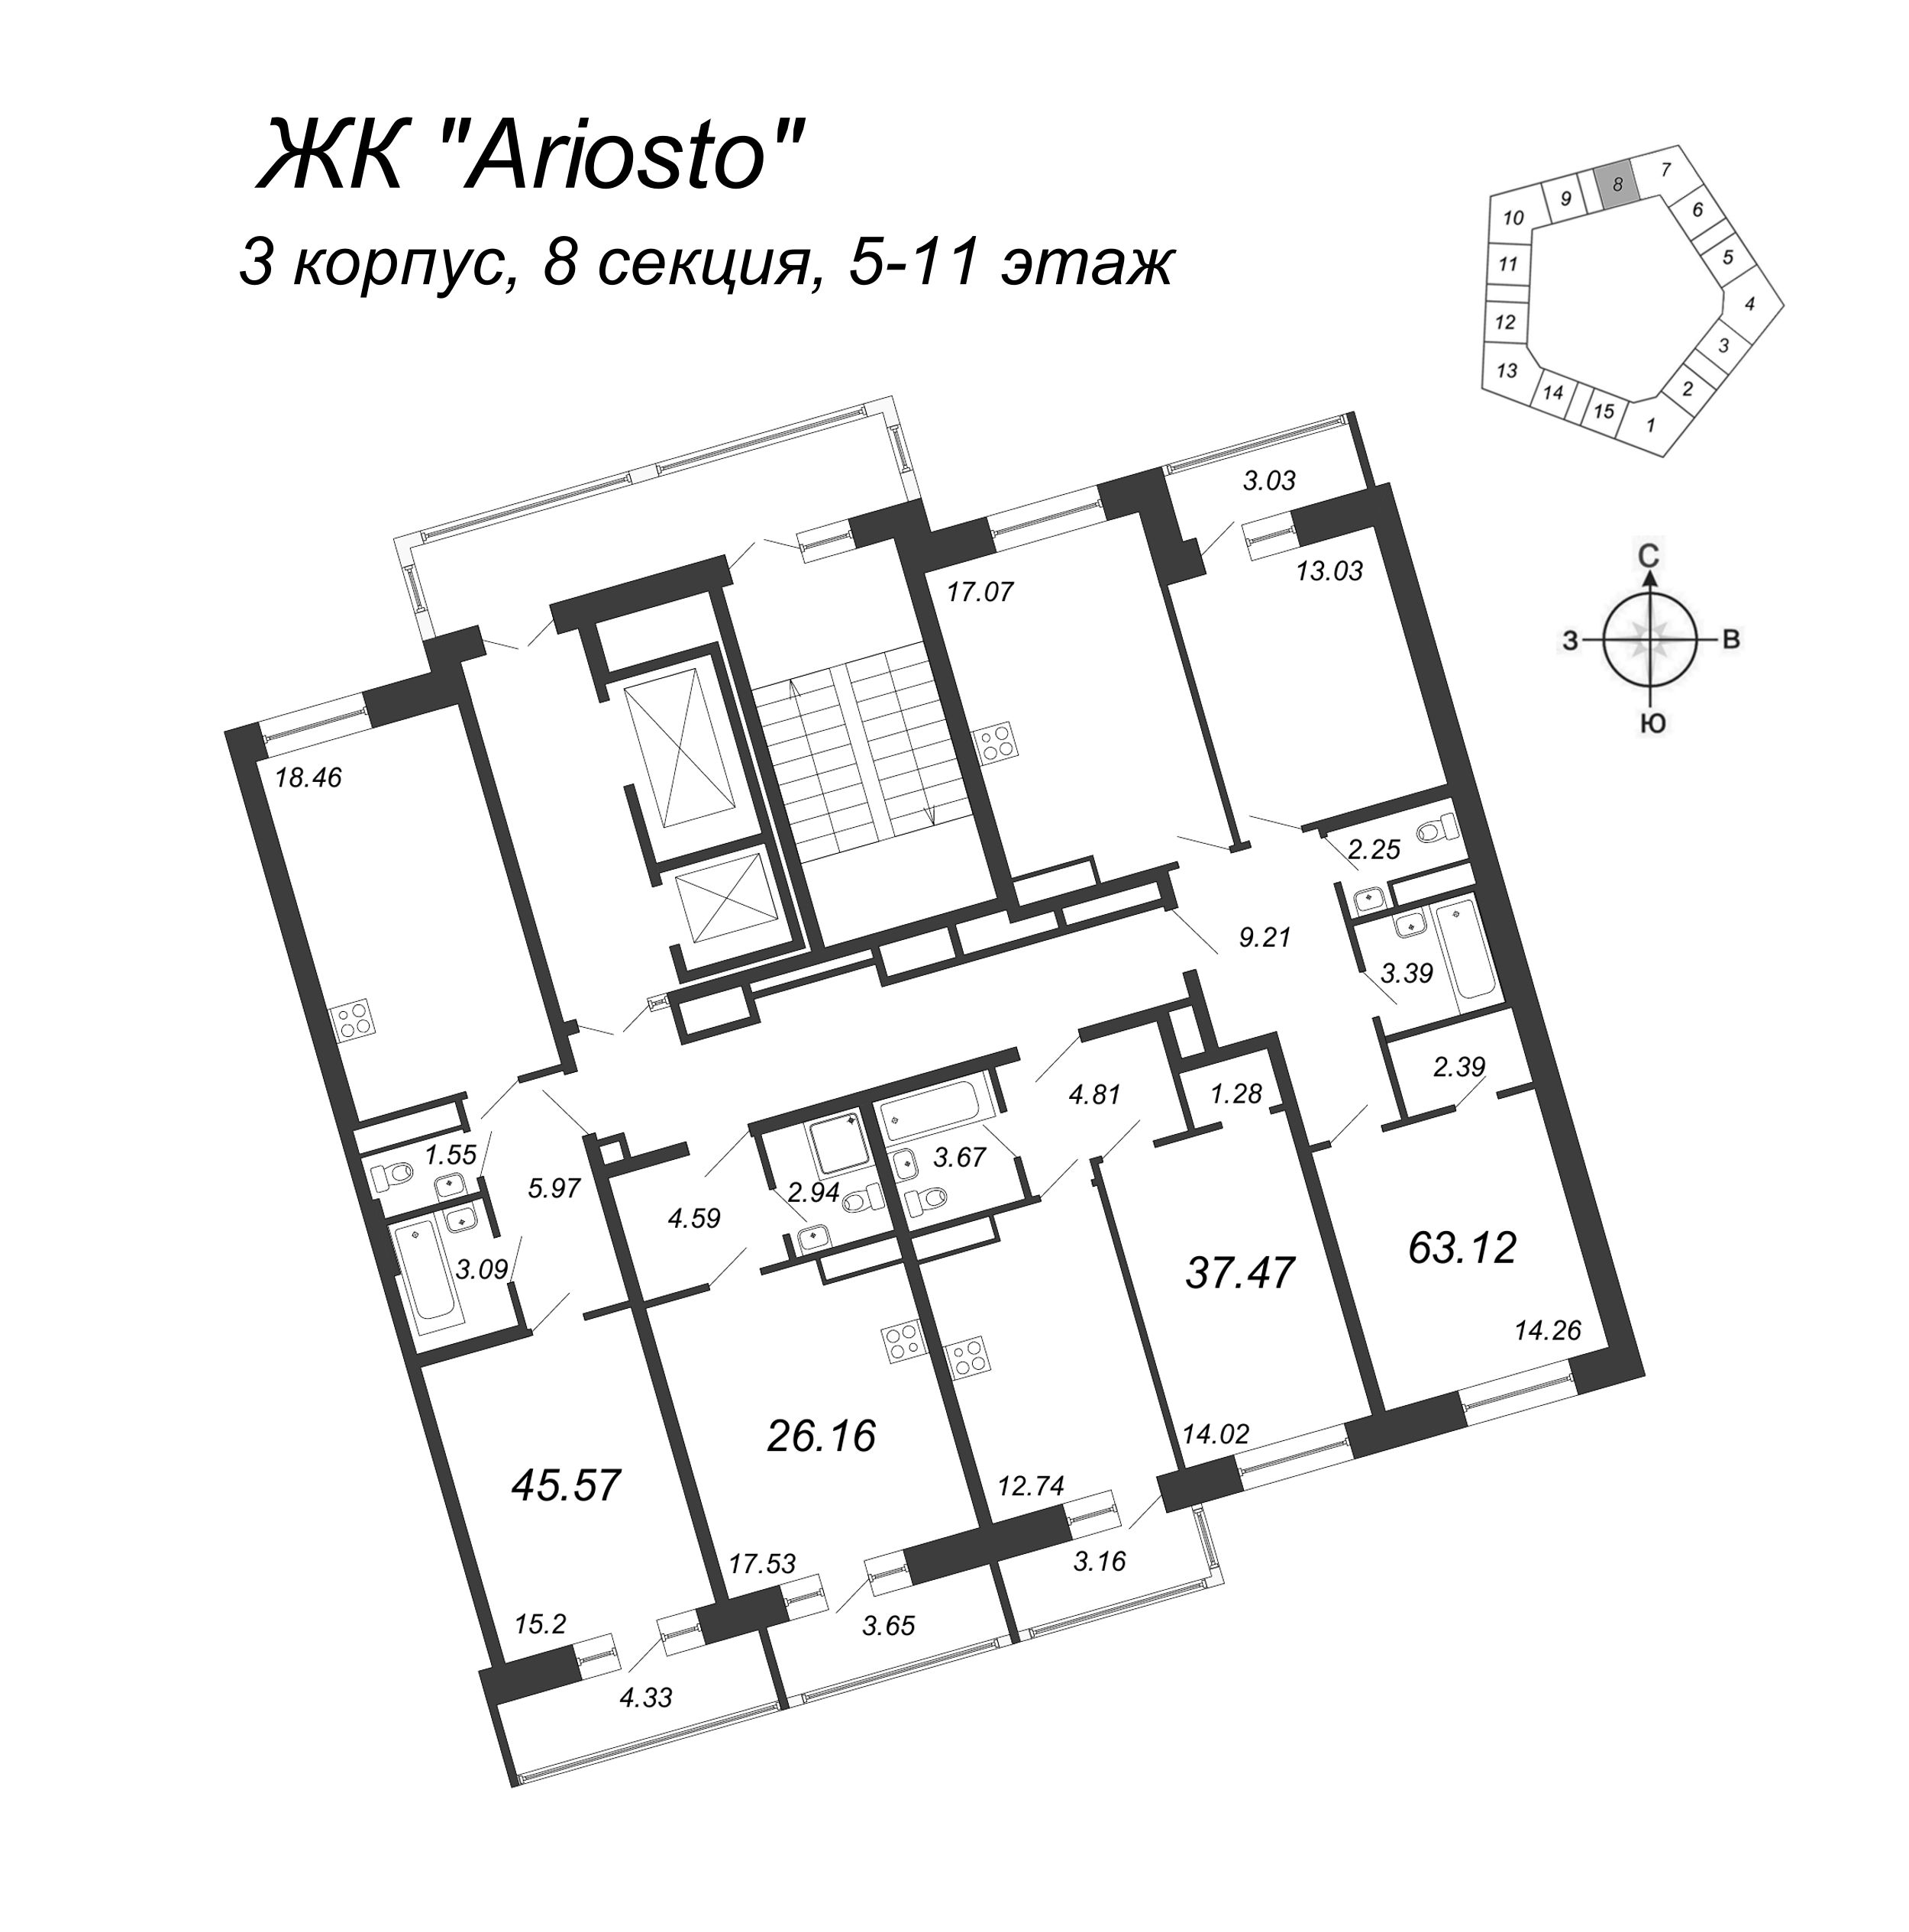 3-комнатная (Евро) квартира, 63.12 м² - планировка этажа